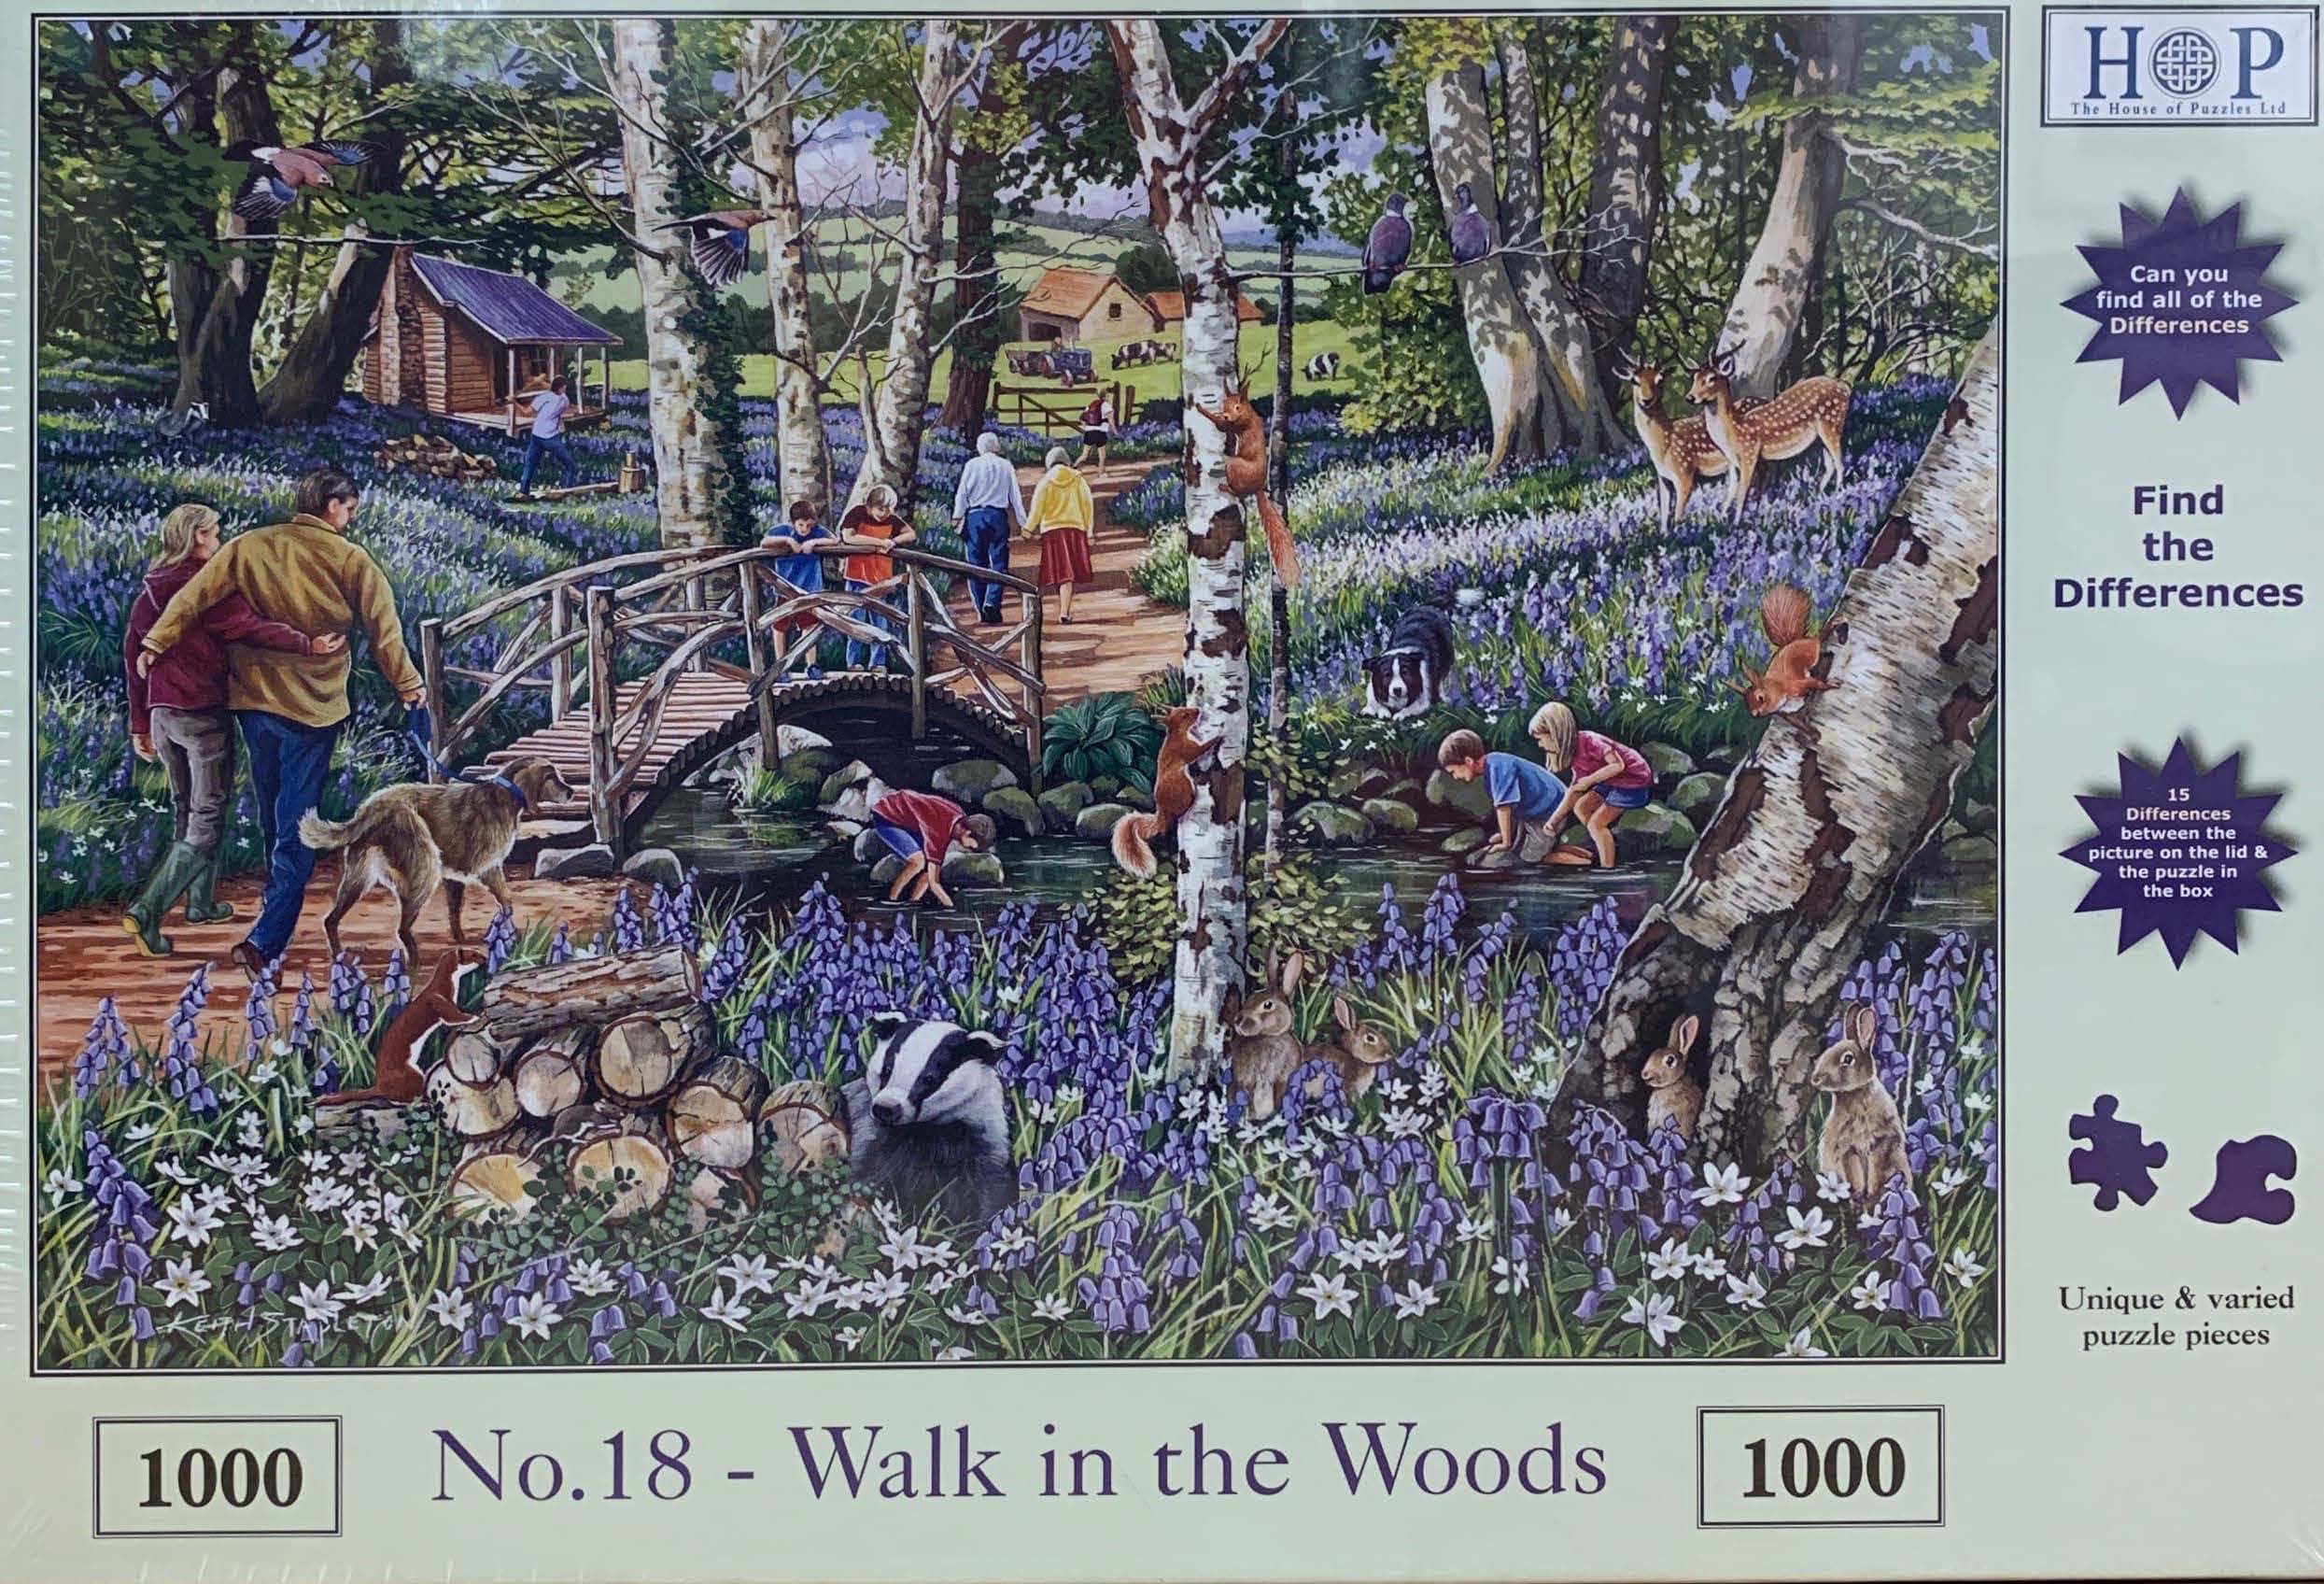 No.18 - Walk in the Woods